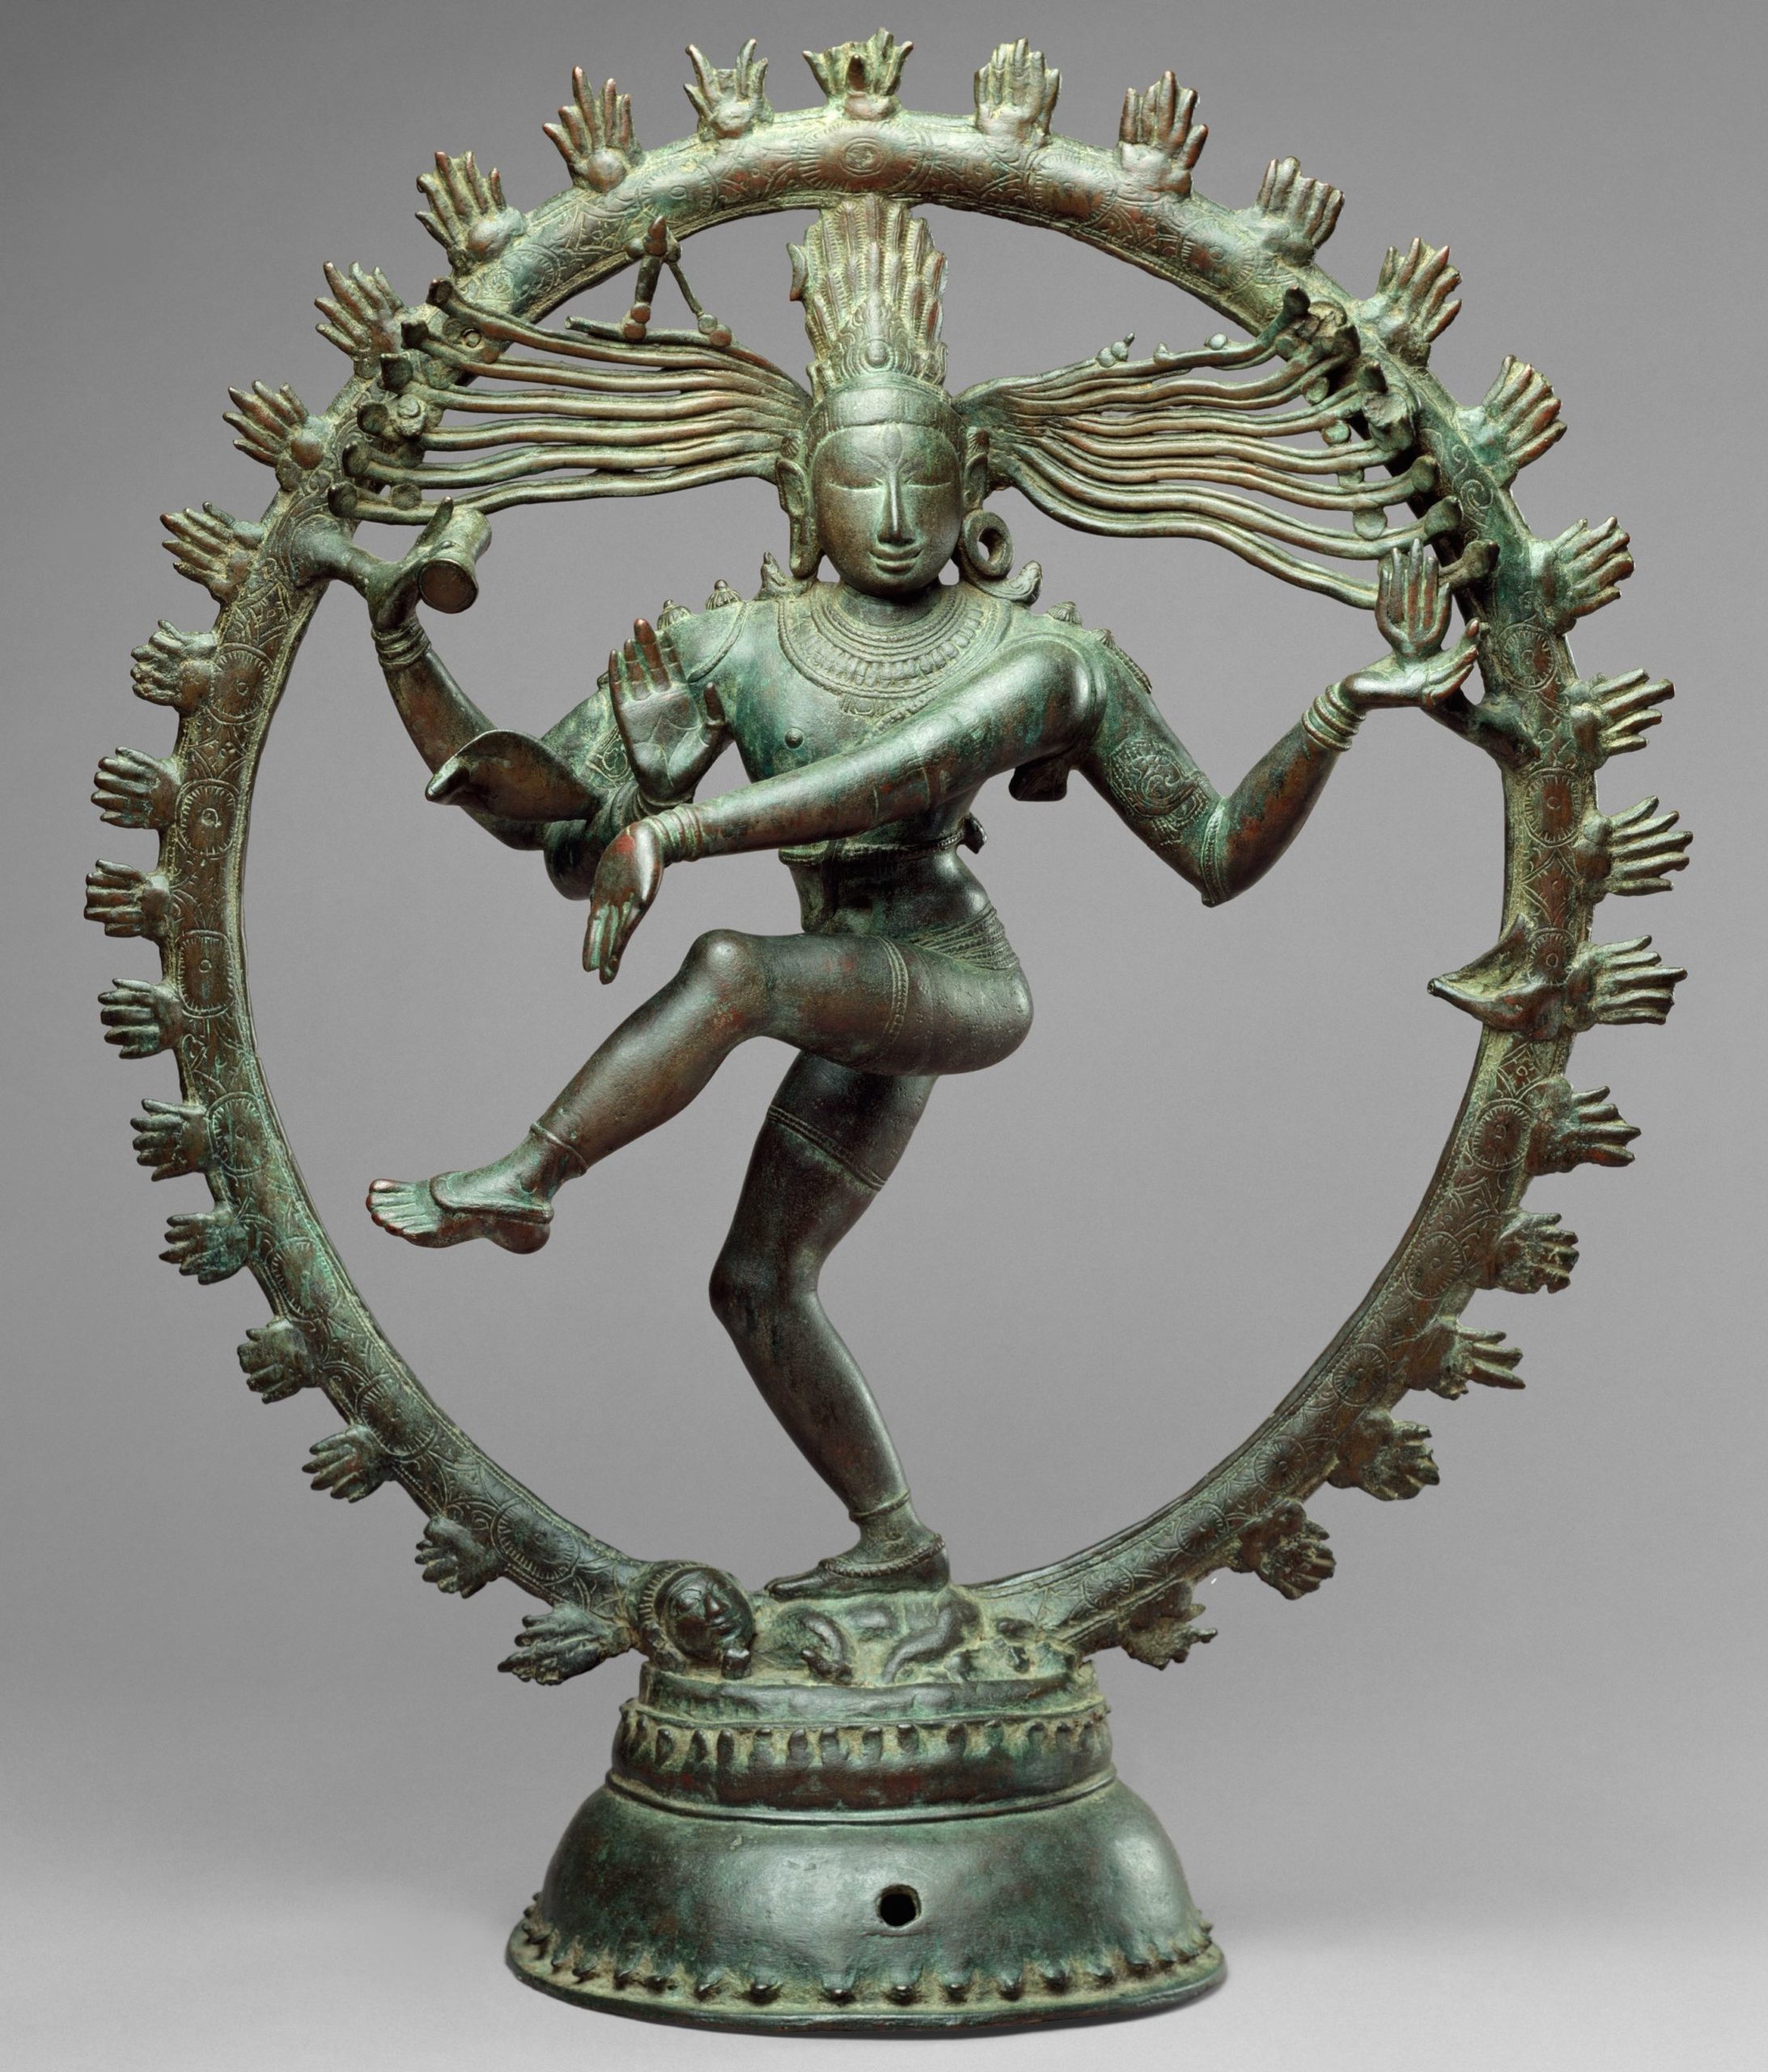 Shiva as Lord of the Dance (Nataraja), c. 11th century, Chola period, copper alloy, 68.3 x 56.5 cm (The Metropolitan Museum of Art)